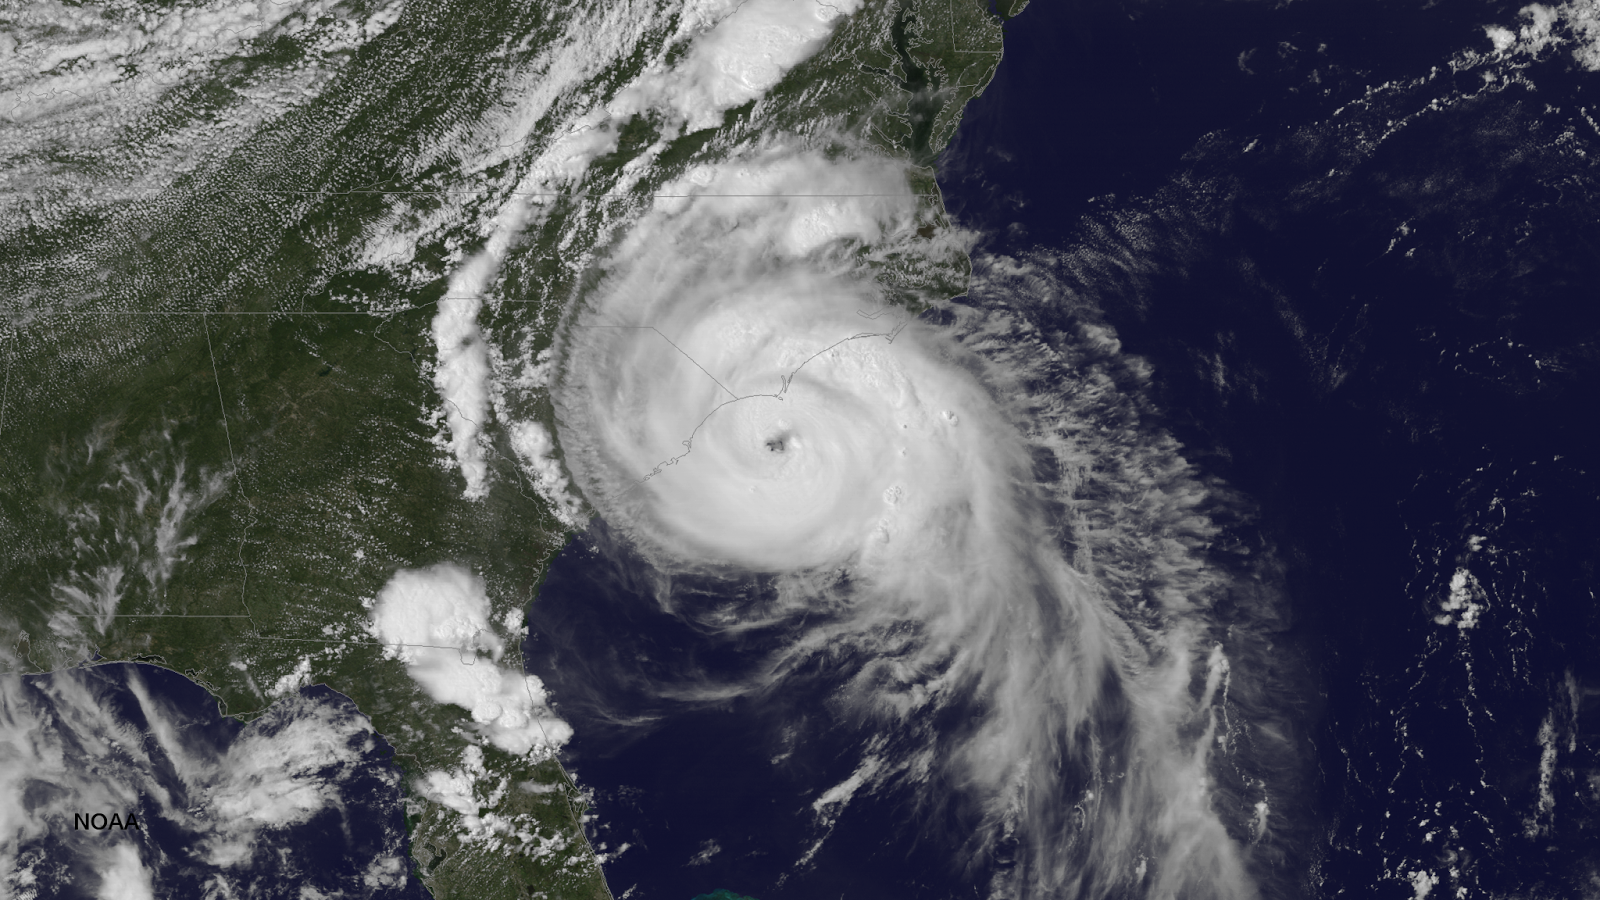 MEC&F Expert Engineers : NOAA's 2017 Atlantic Hurricane Season Outlook indicates that an above